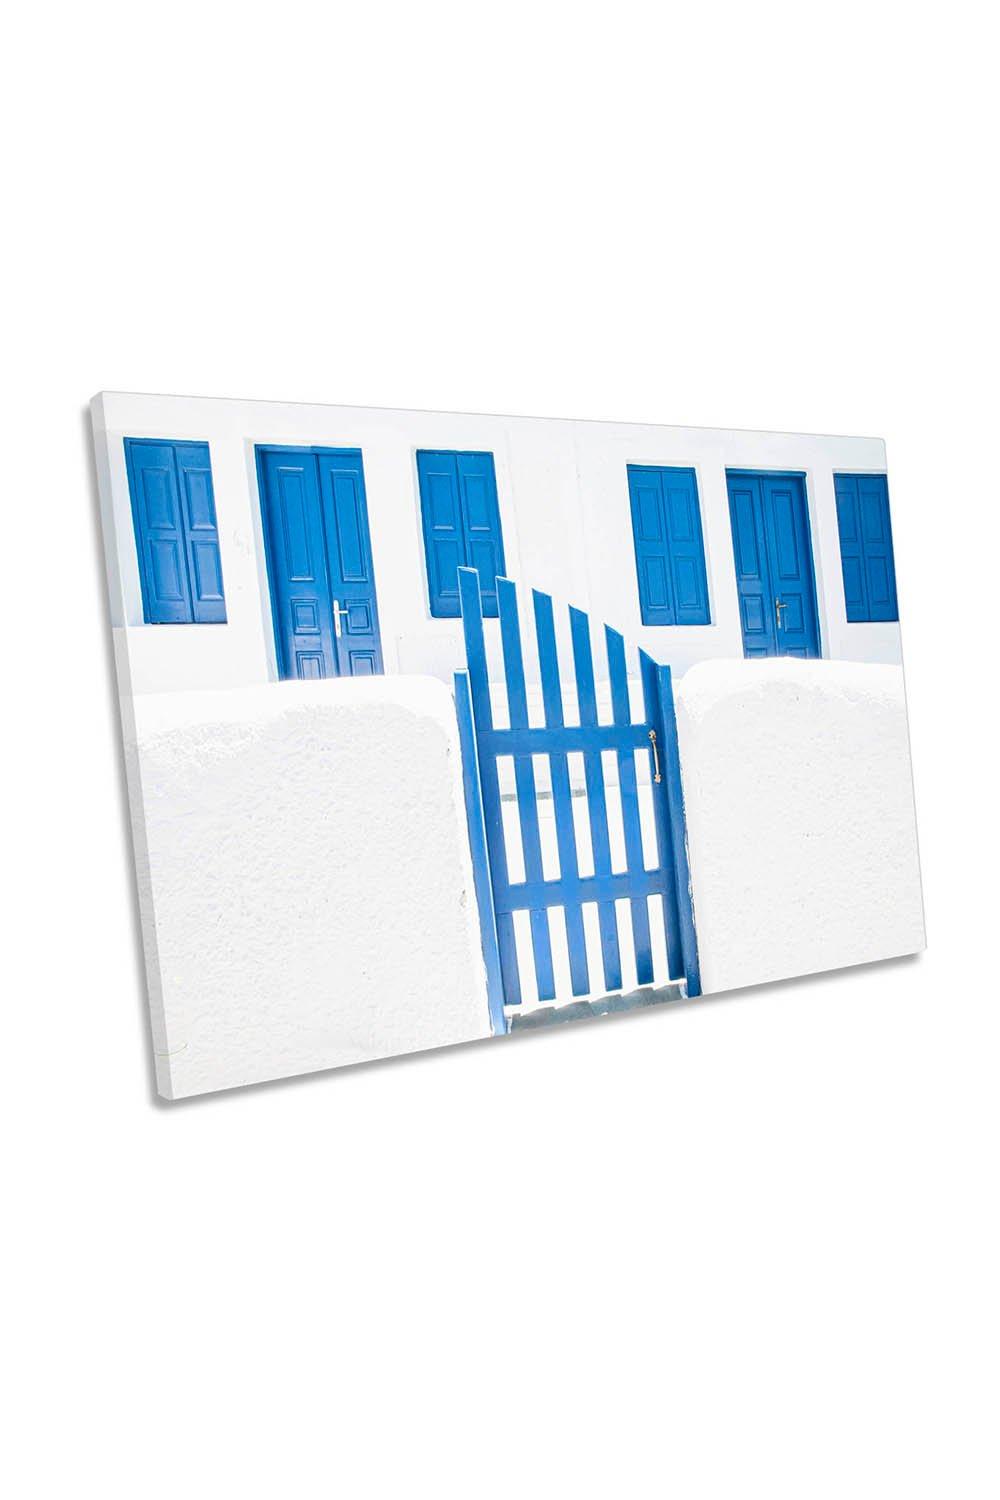 White Wash and Blue Gates Santorini Island Canvas Wall Art Picture Print